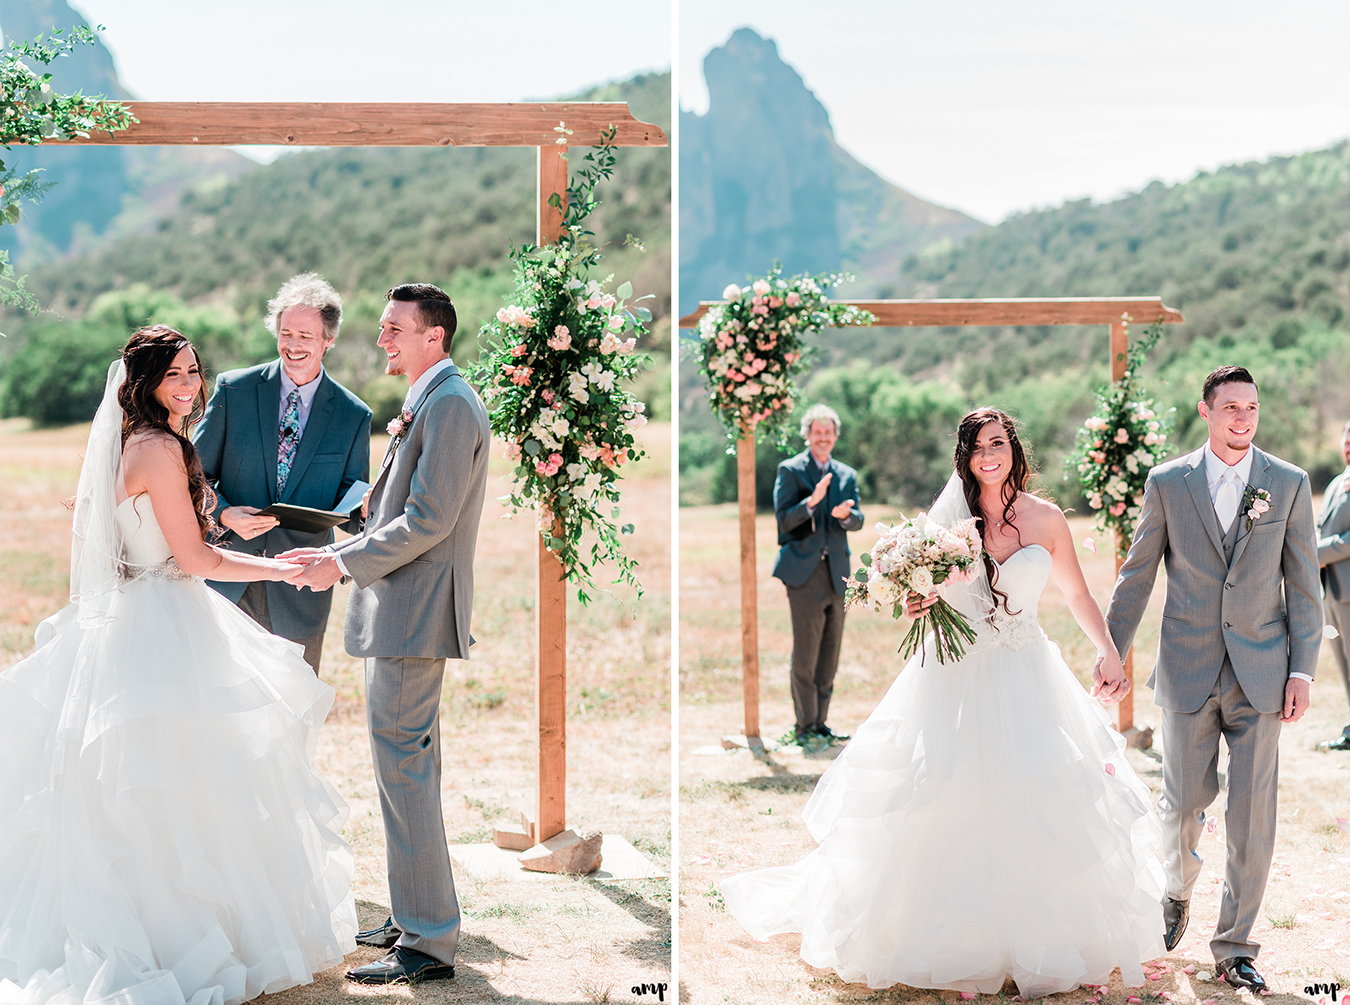 Curt & Madison's wedding at The Lodge at Needle Rock | amanda.matilda.photography